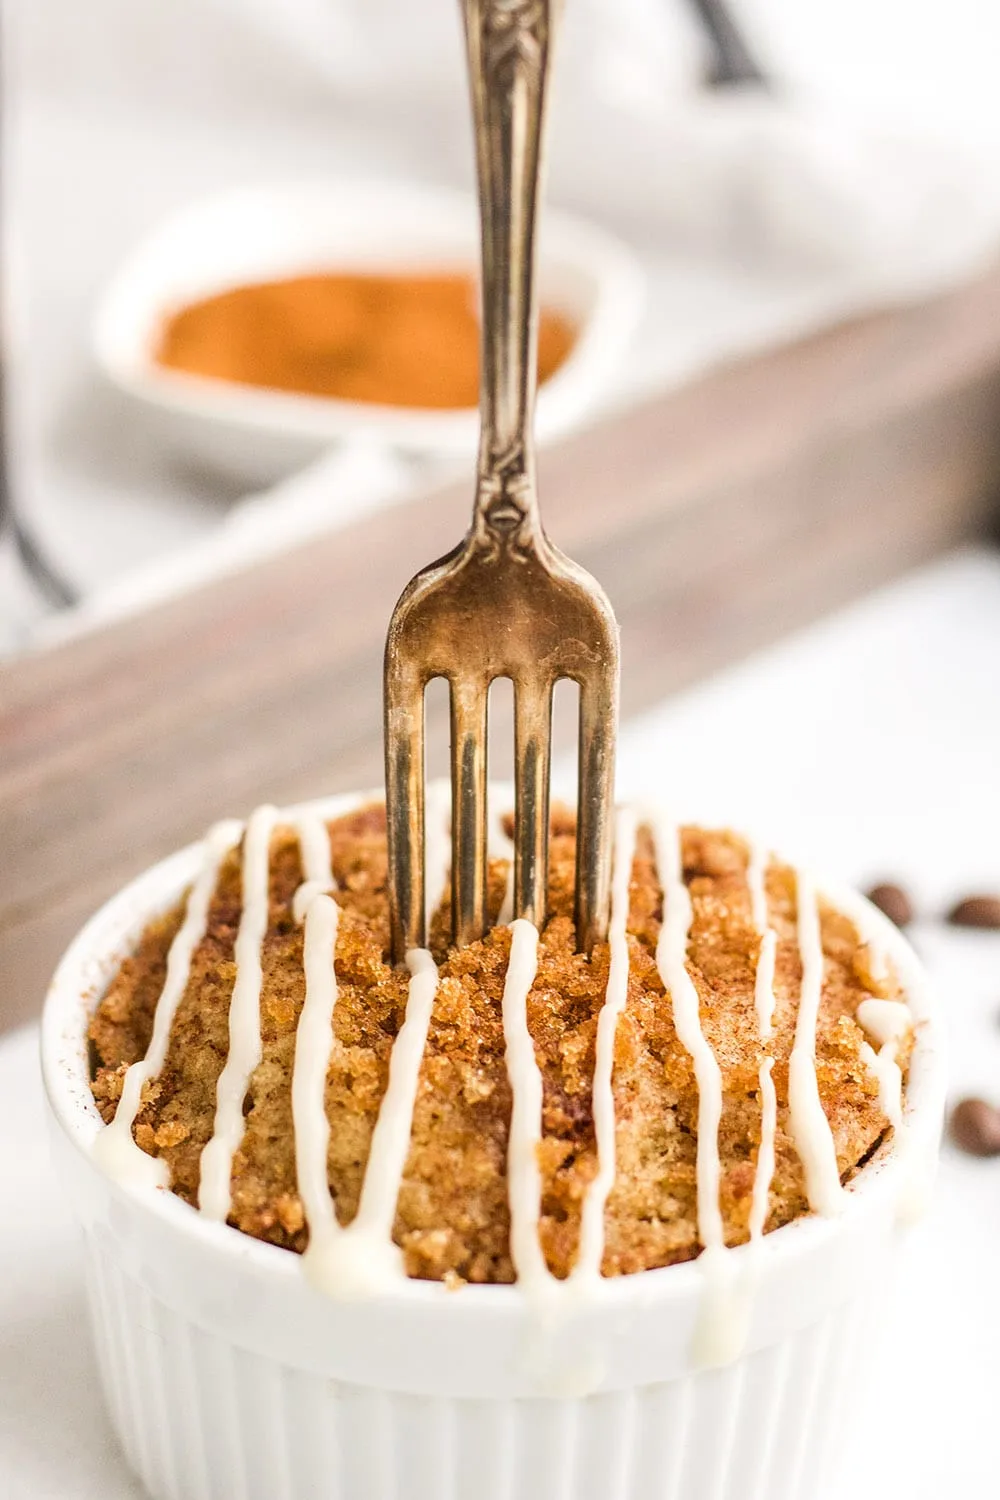 Fork in a coffee cake mug cake topped with glaze.